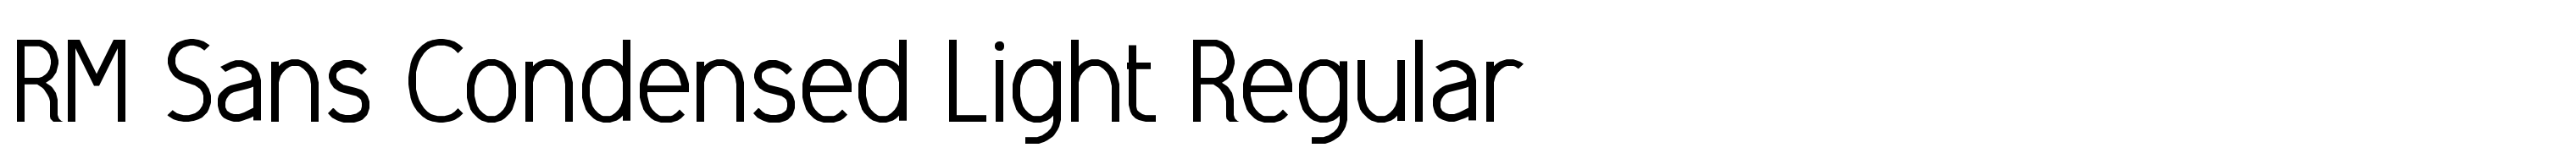 RM Sans Condensed Light Regular